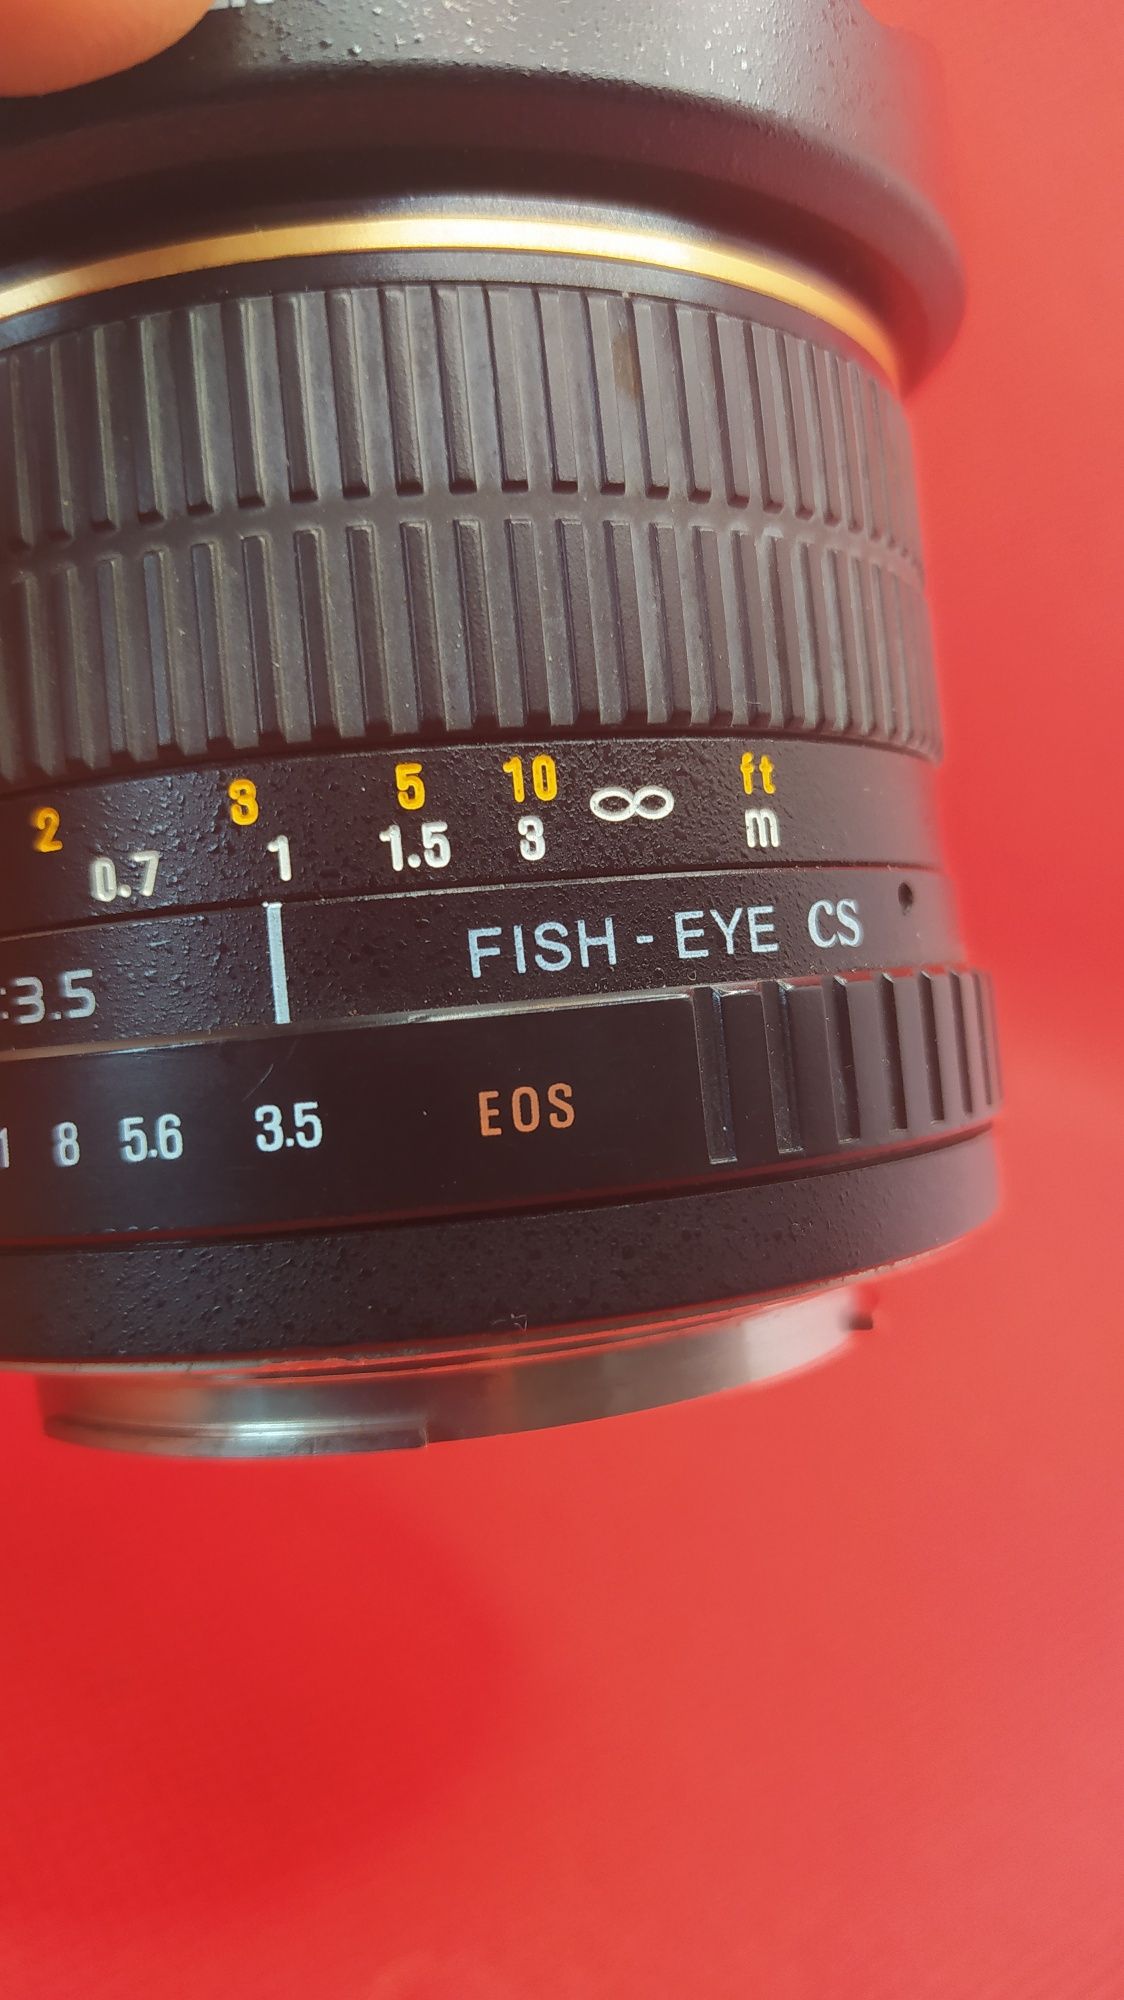 Bower 8mm f3.5 ultra wide fisheye